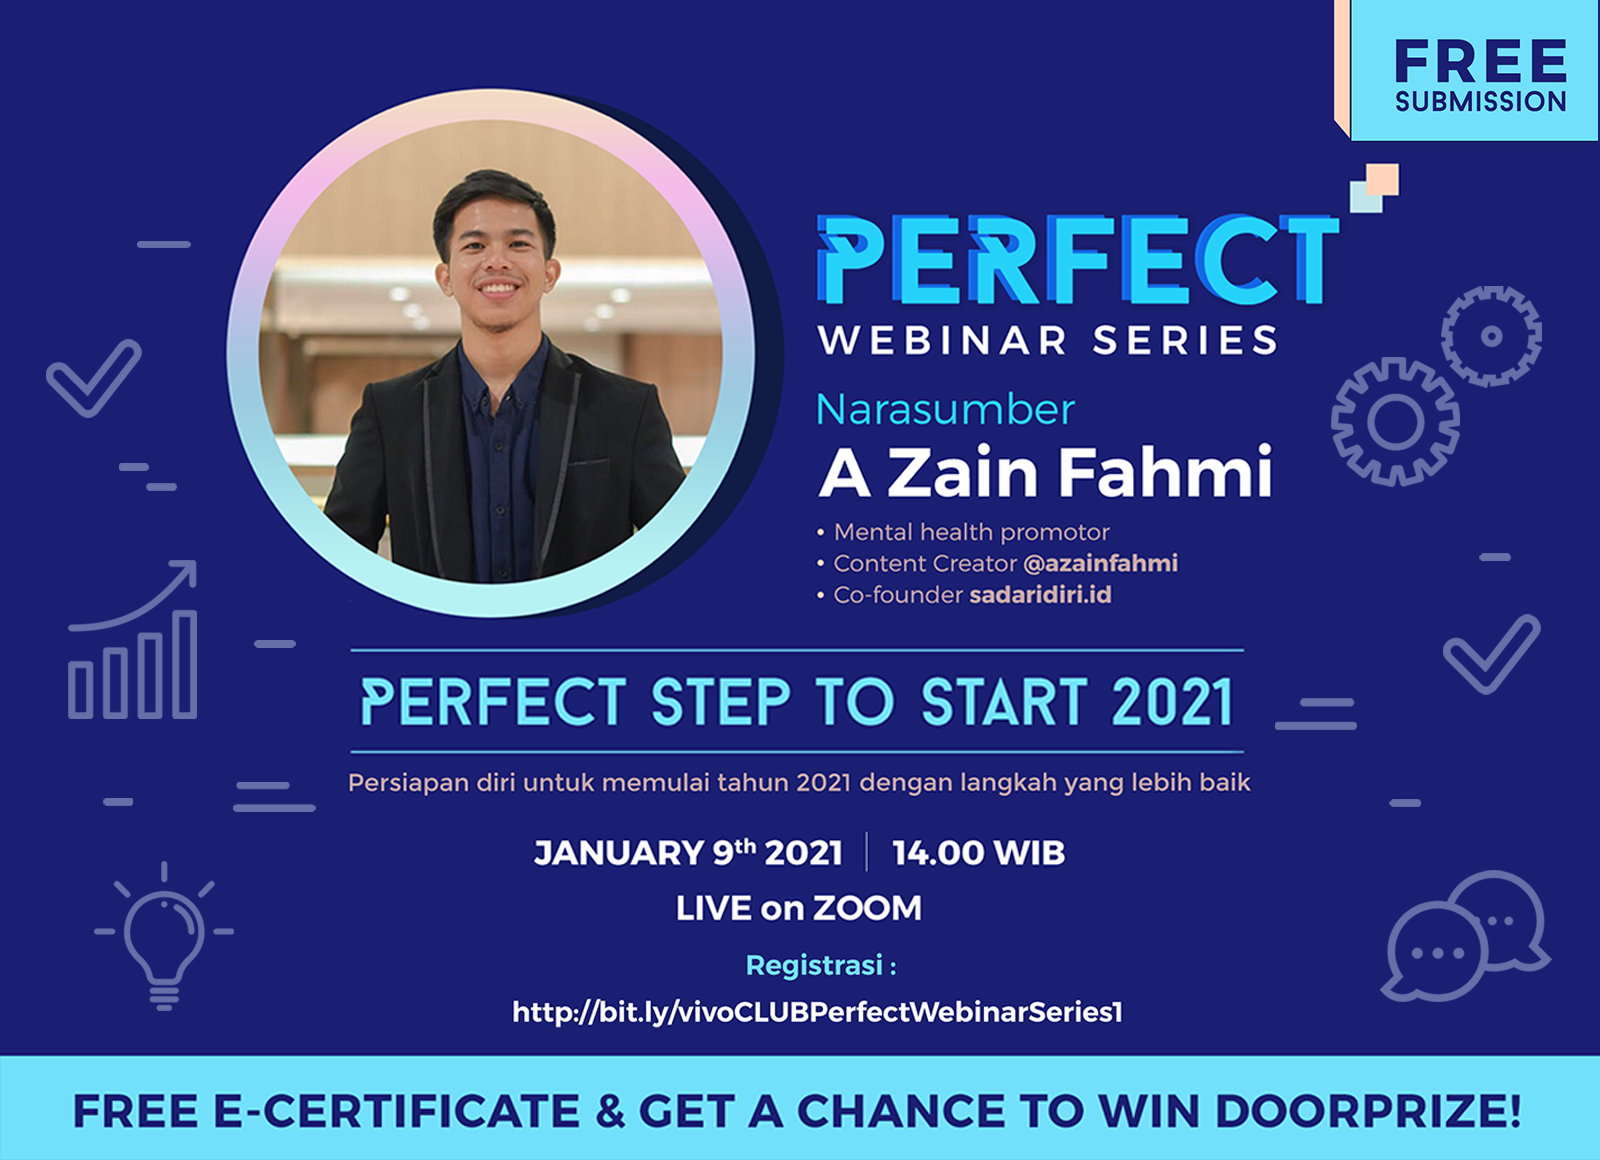 vivo CLUB Indonesia "Perfect Step to Start 2021"